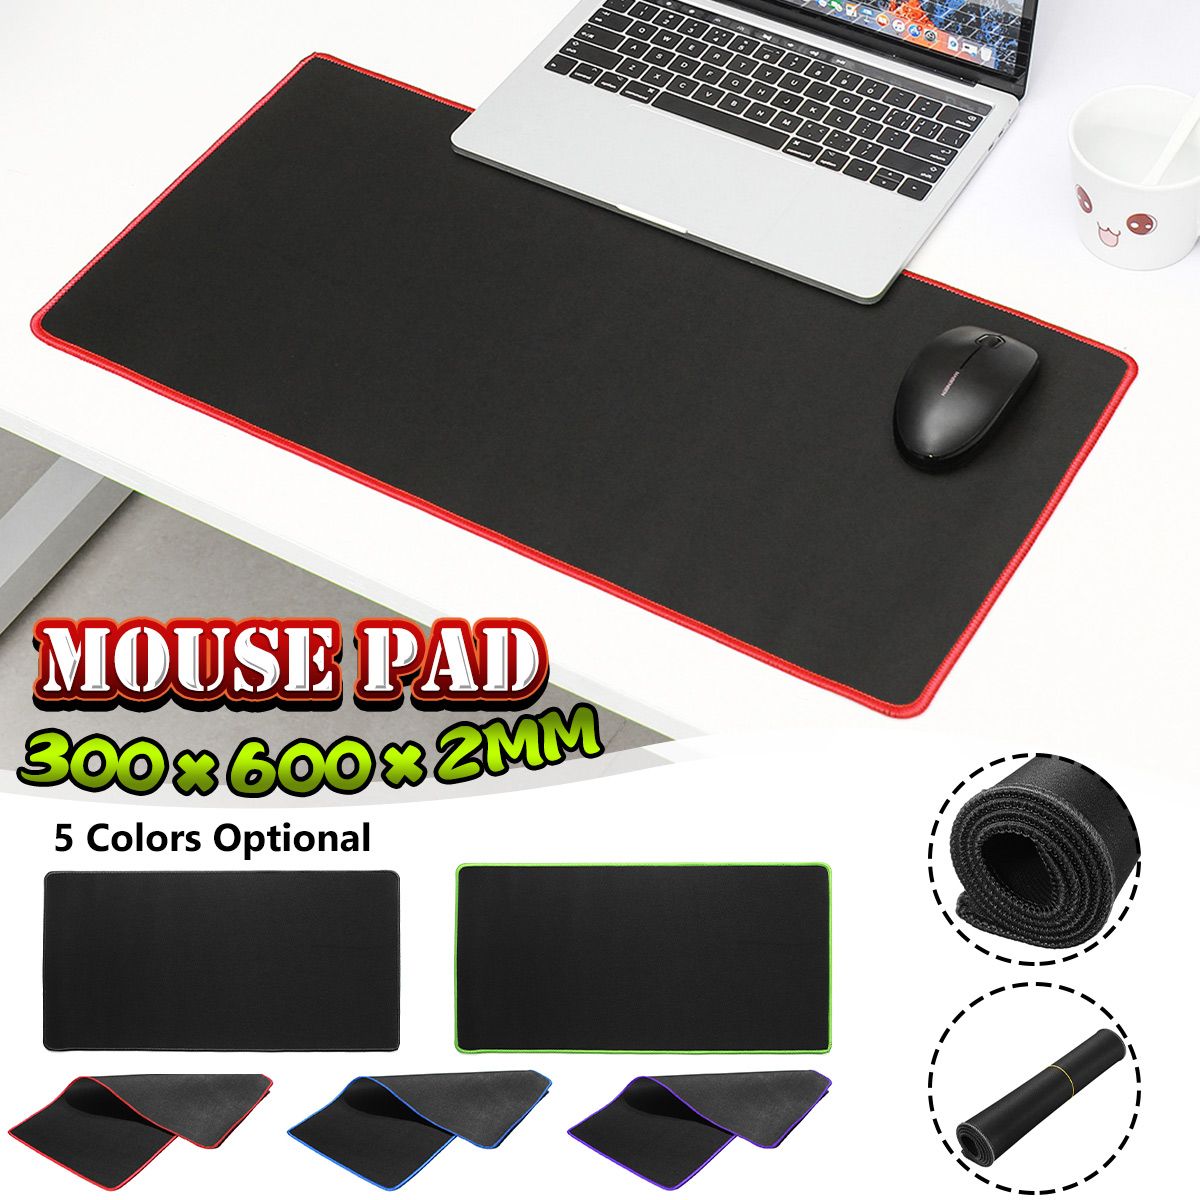 300600mm-Anti-slip-Large-Rubber-Gaming-Mouse-Pad-Desktop-Mat-1443108